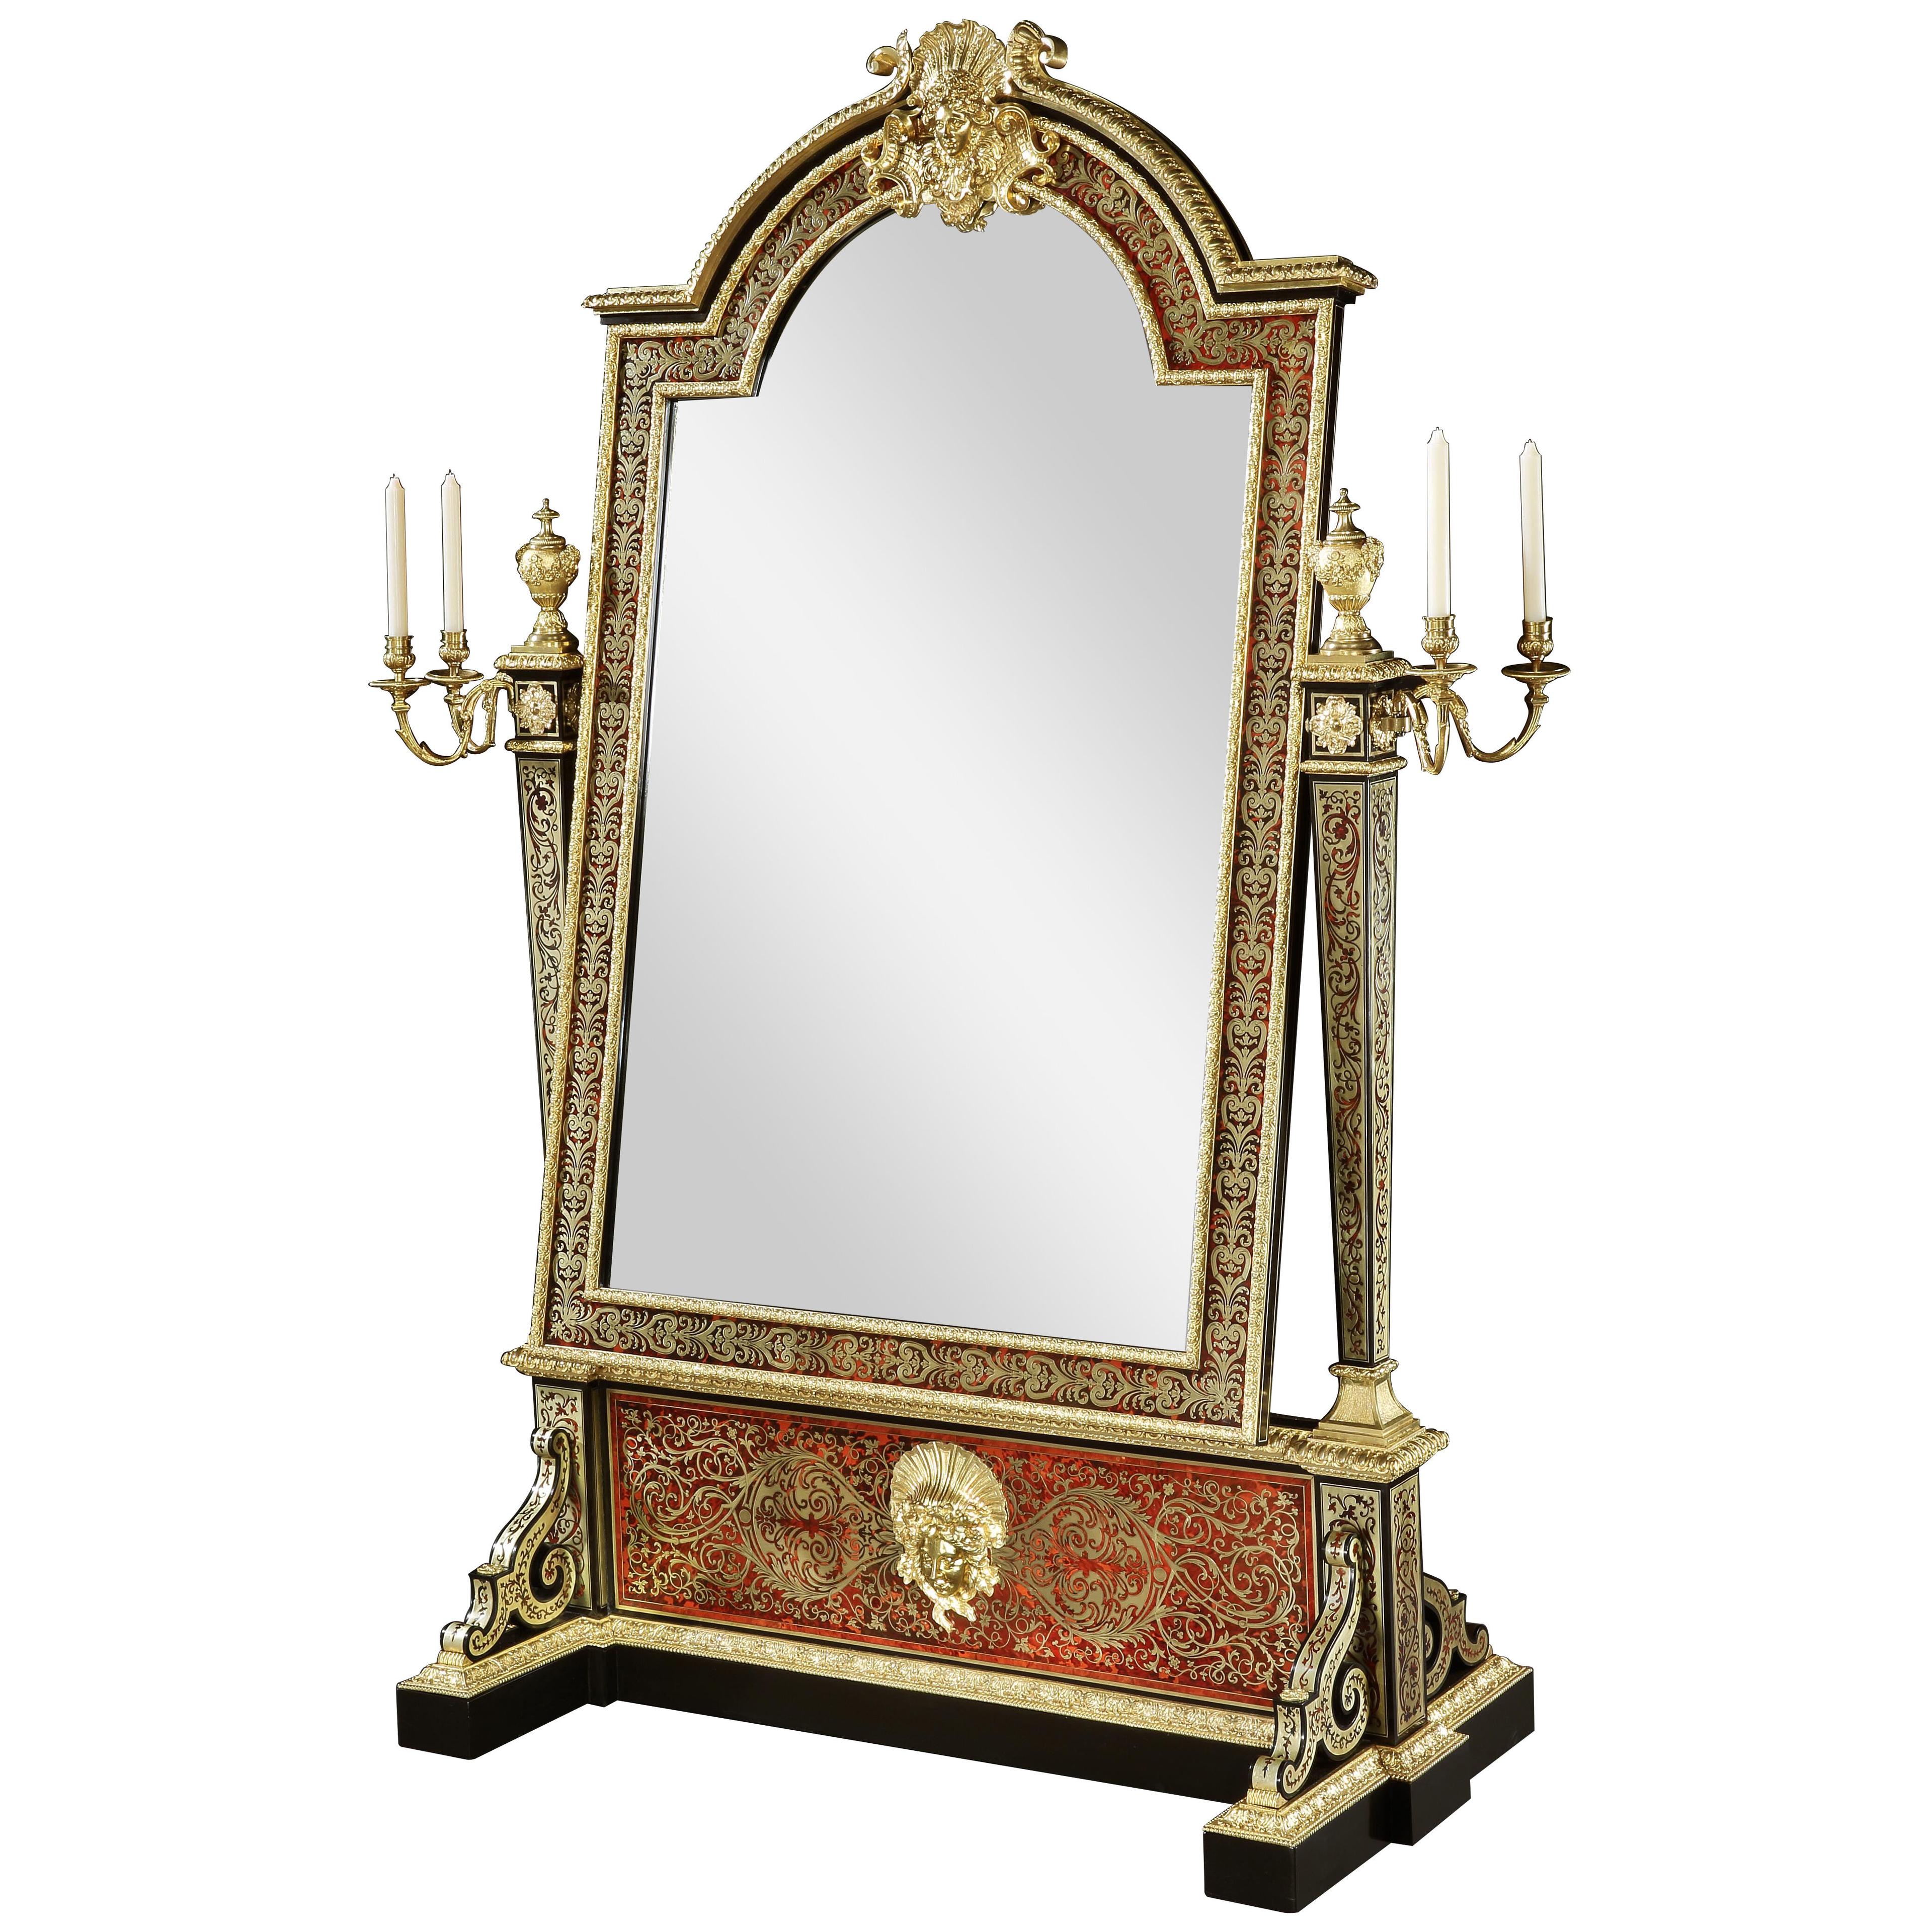 Superb Marquetry-Inlaid Cheval Mirror